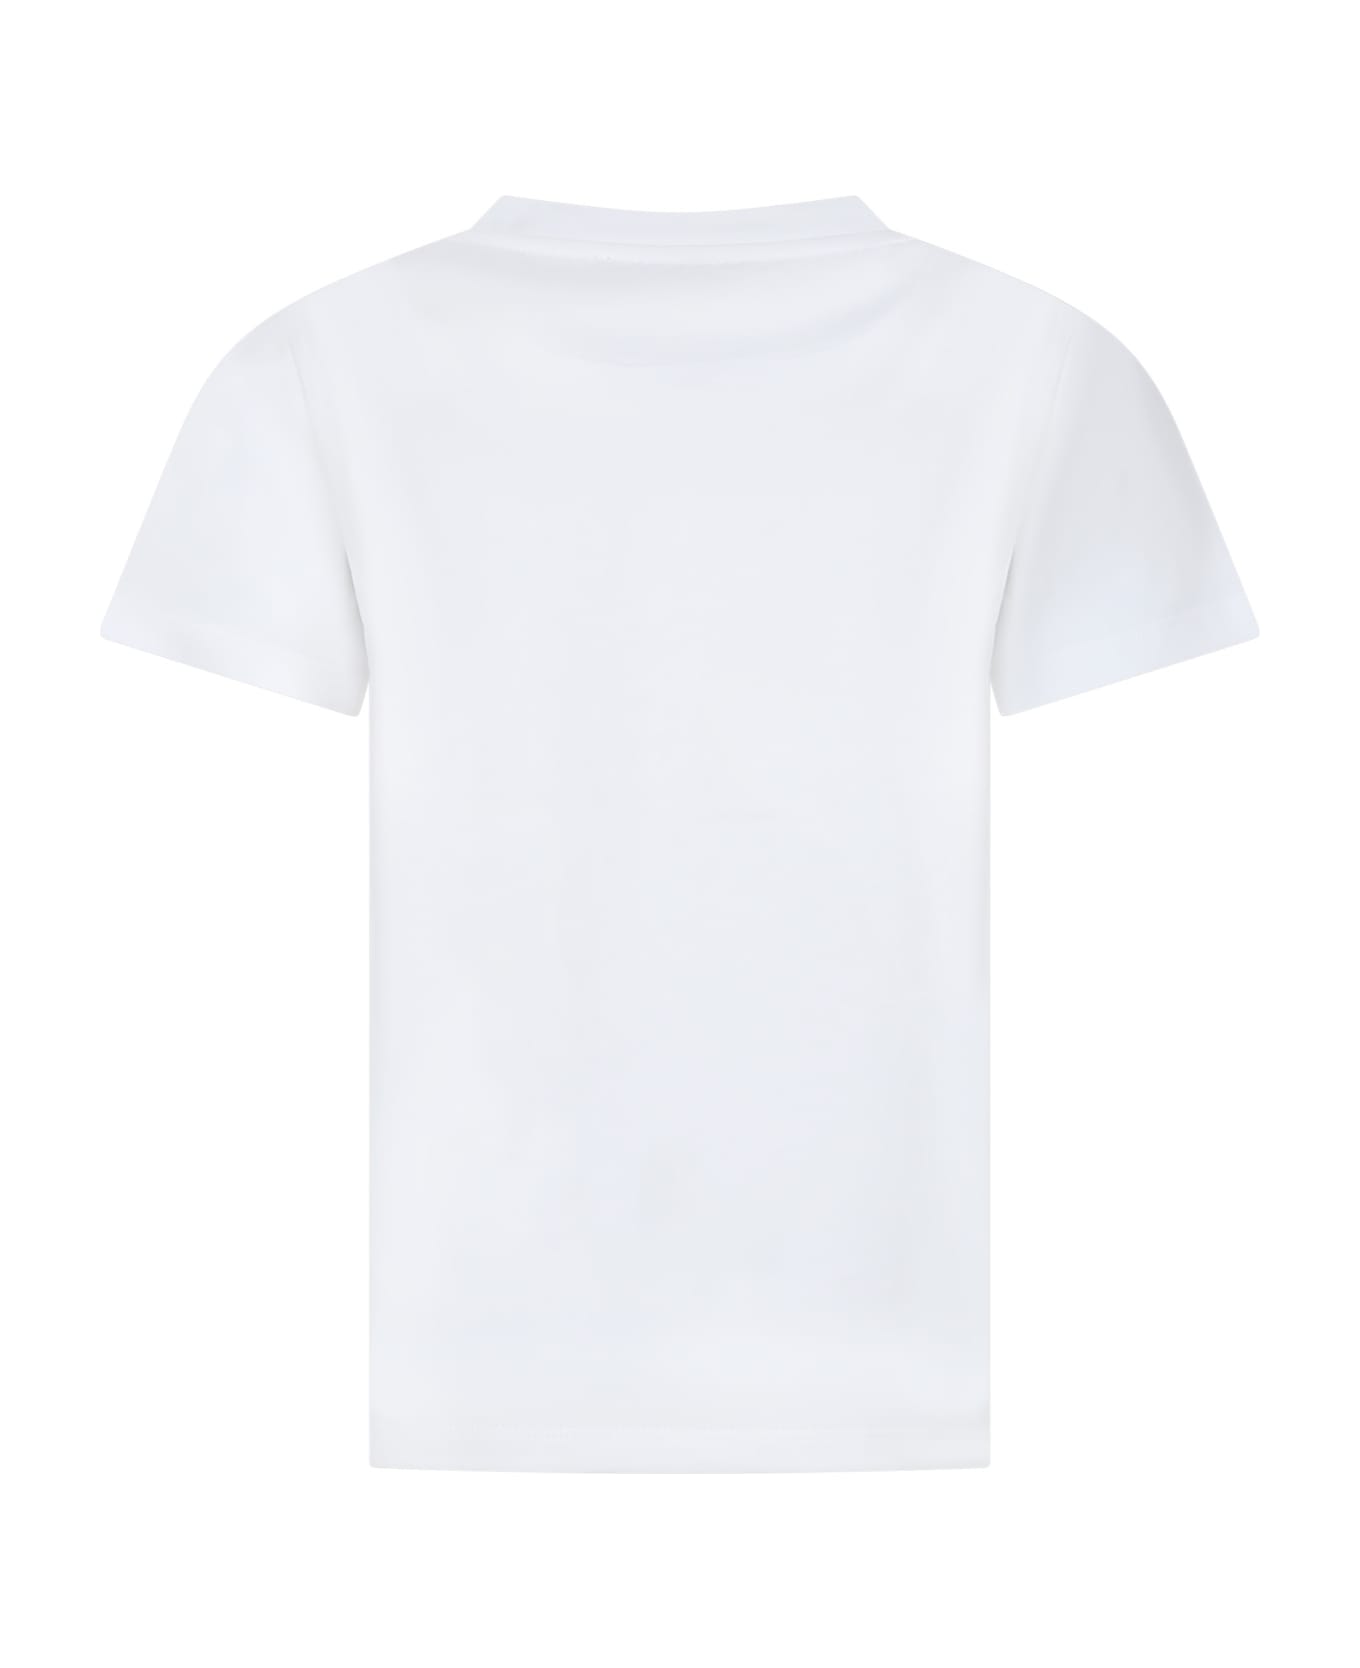 Balmain White T-shirt For Girl With Logo And Rhinestones - White/black